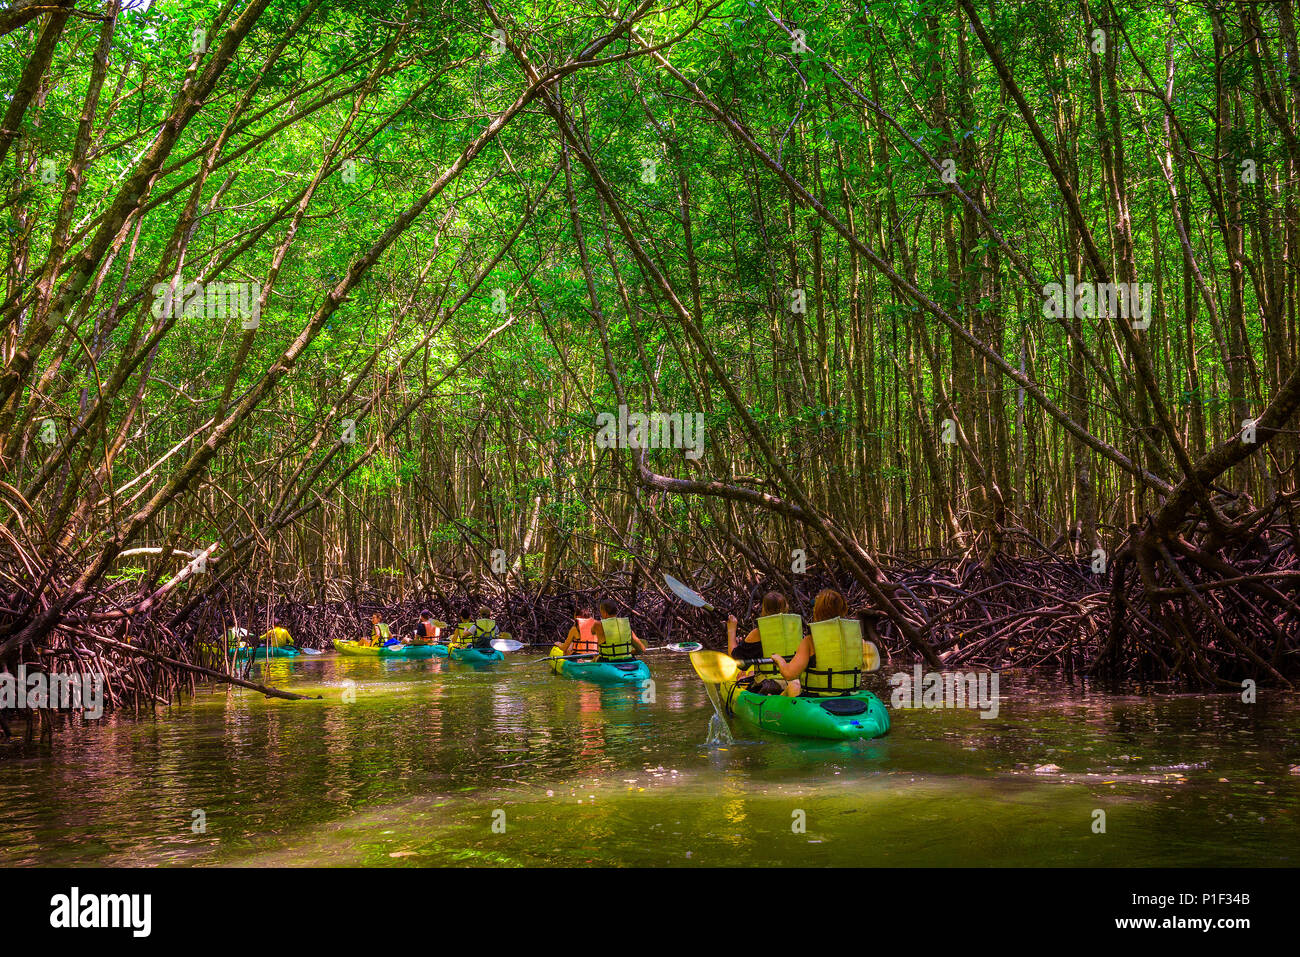 Gruppo di turisti kayak nella giungla di mangrovie Foto Stock